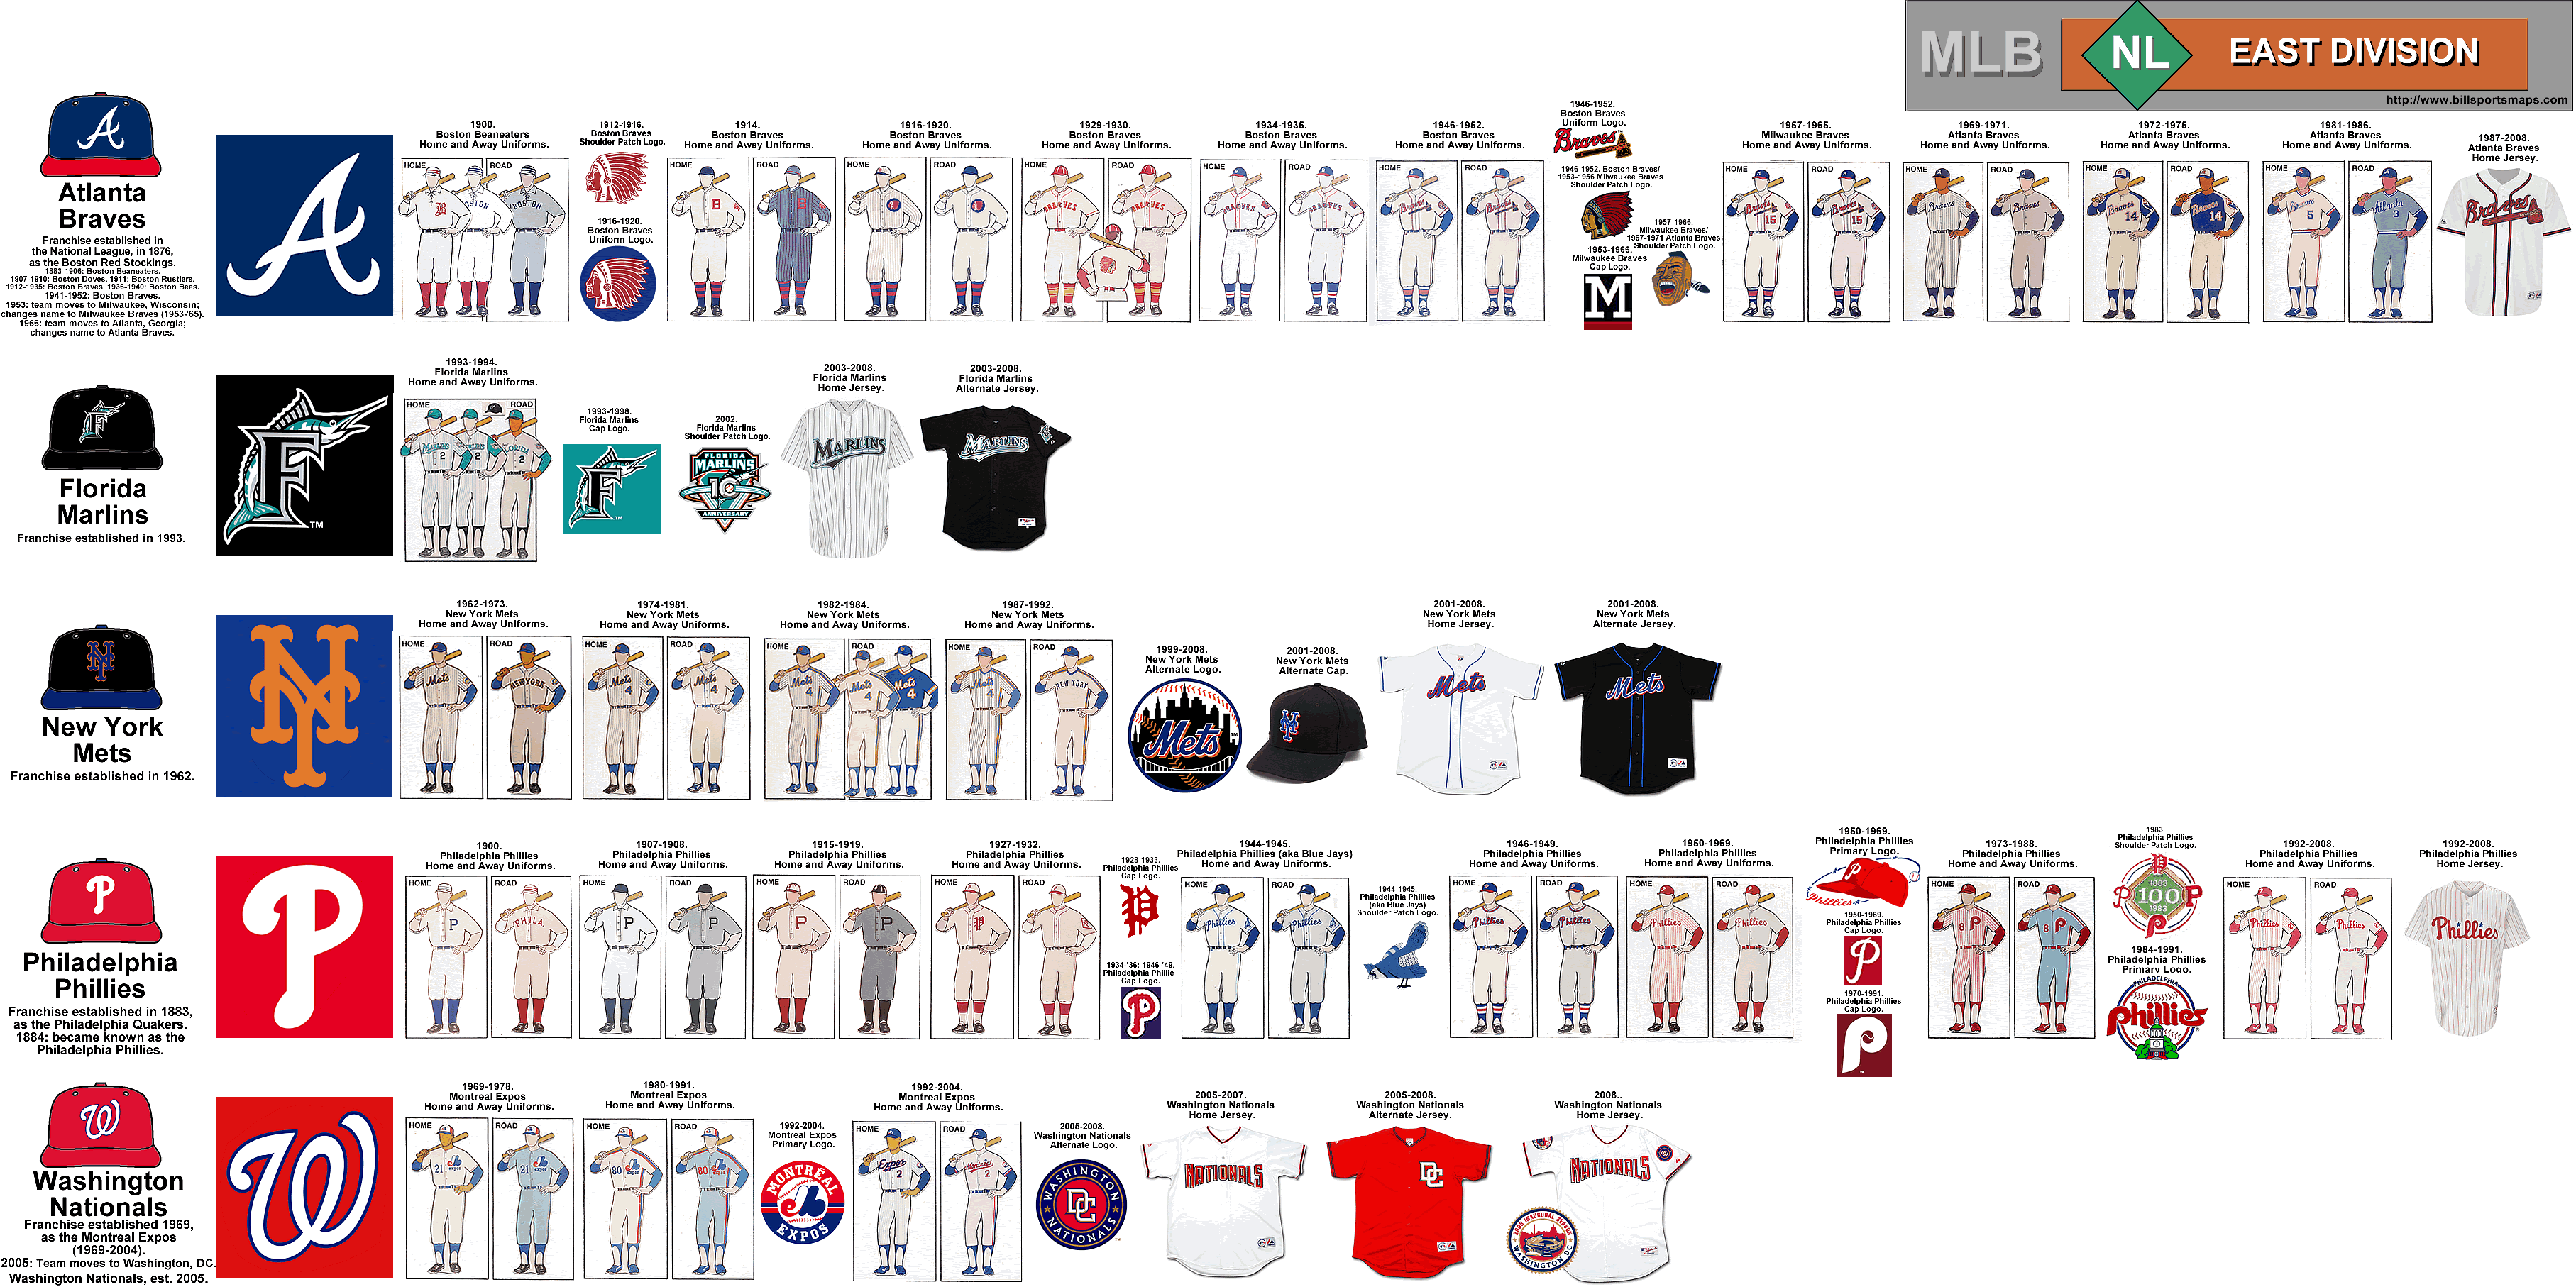 Washington Nationals Road Uniform - National League (NL) - Chris Creamer's  Sports Logos Page 